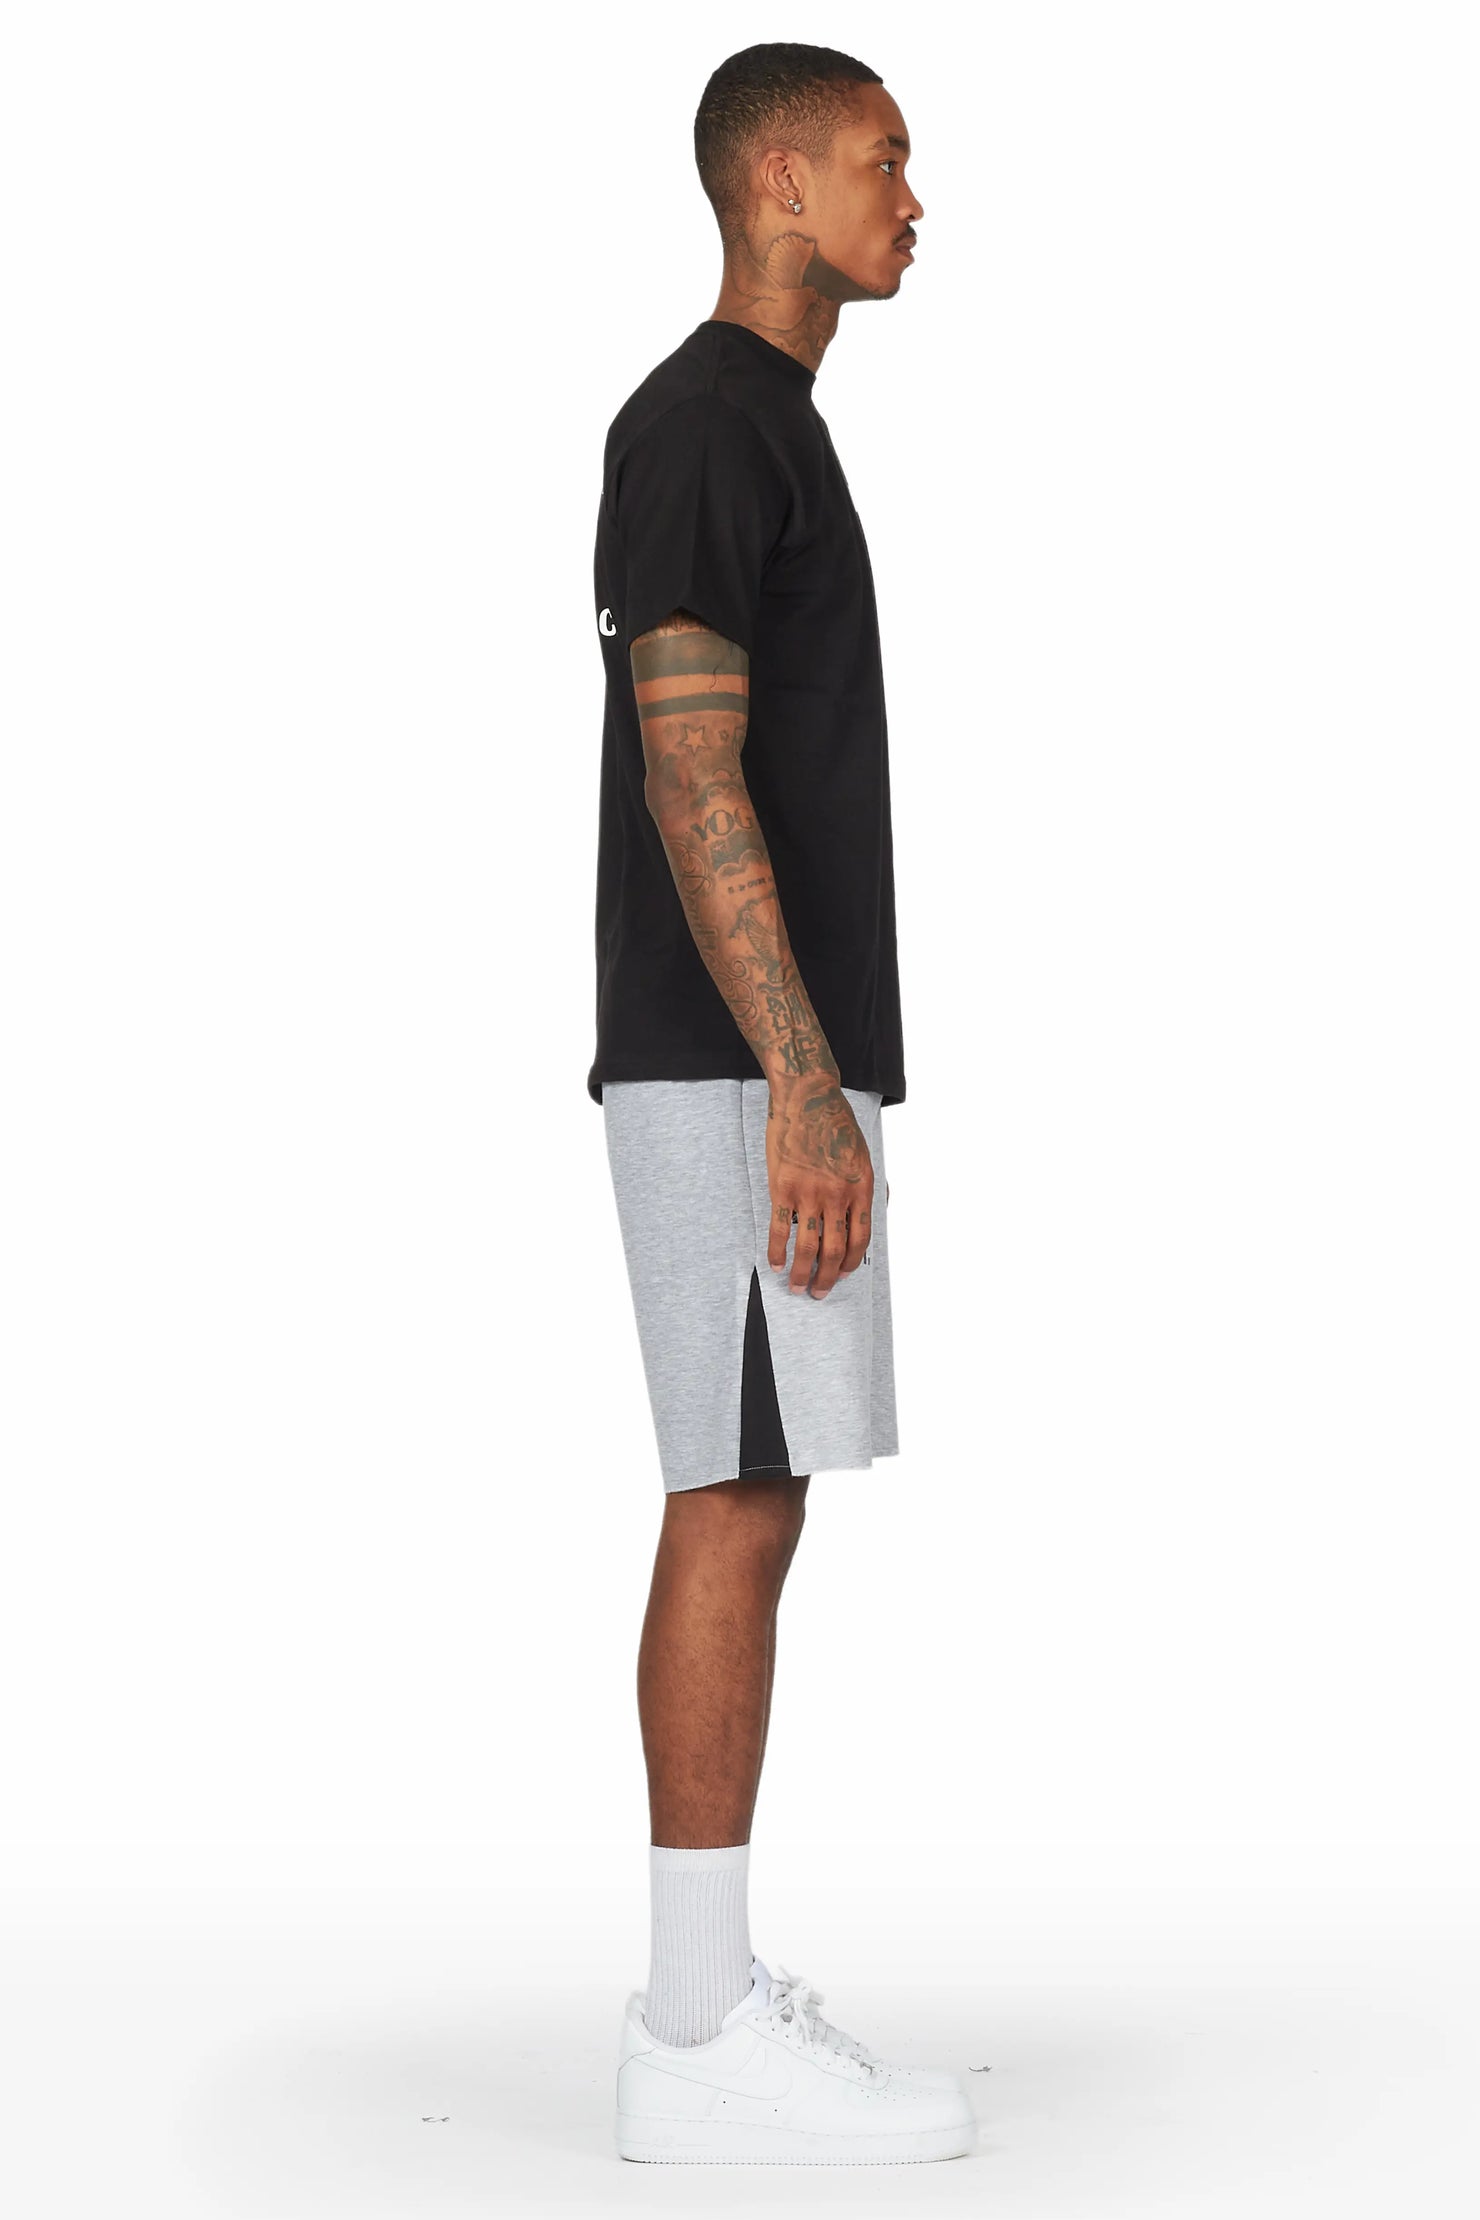 Buck 3.0 Black/Grey T-Shirt Short Set